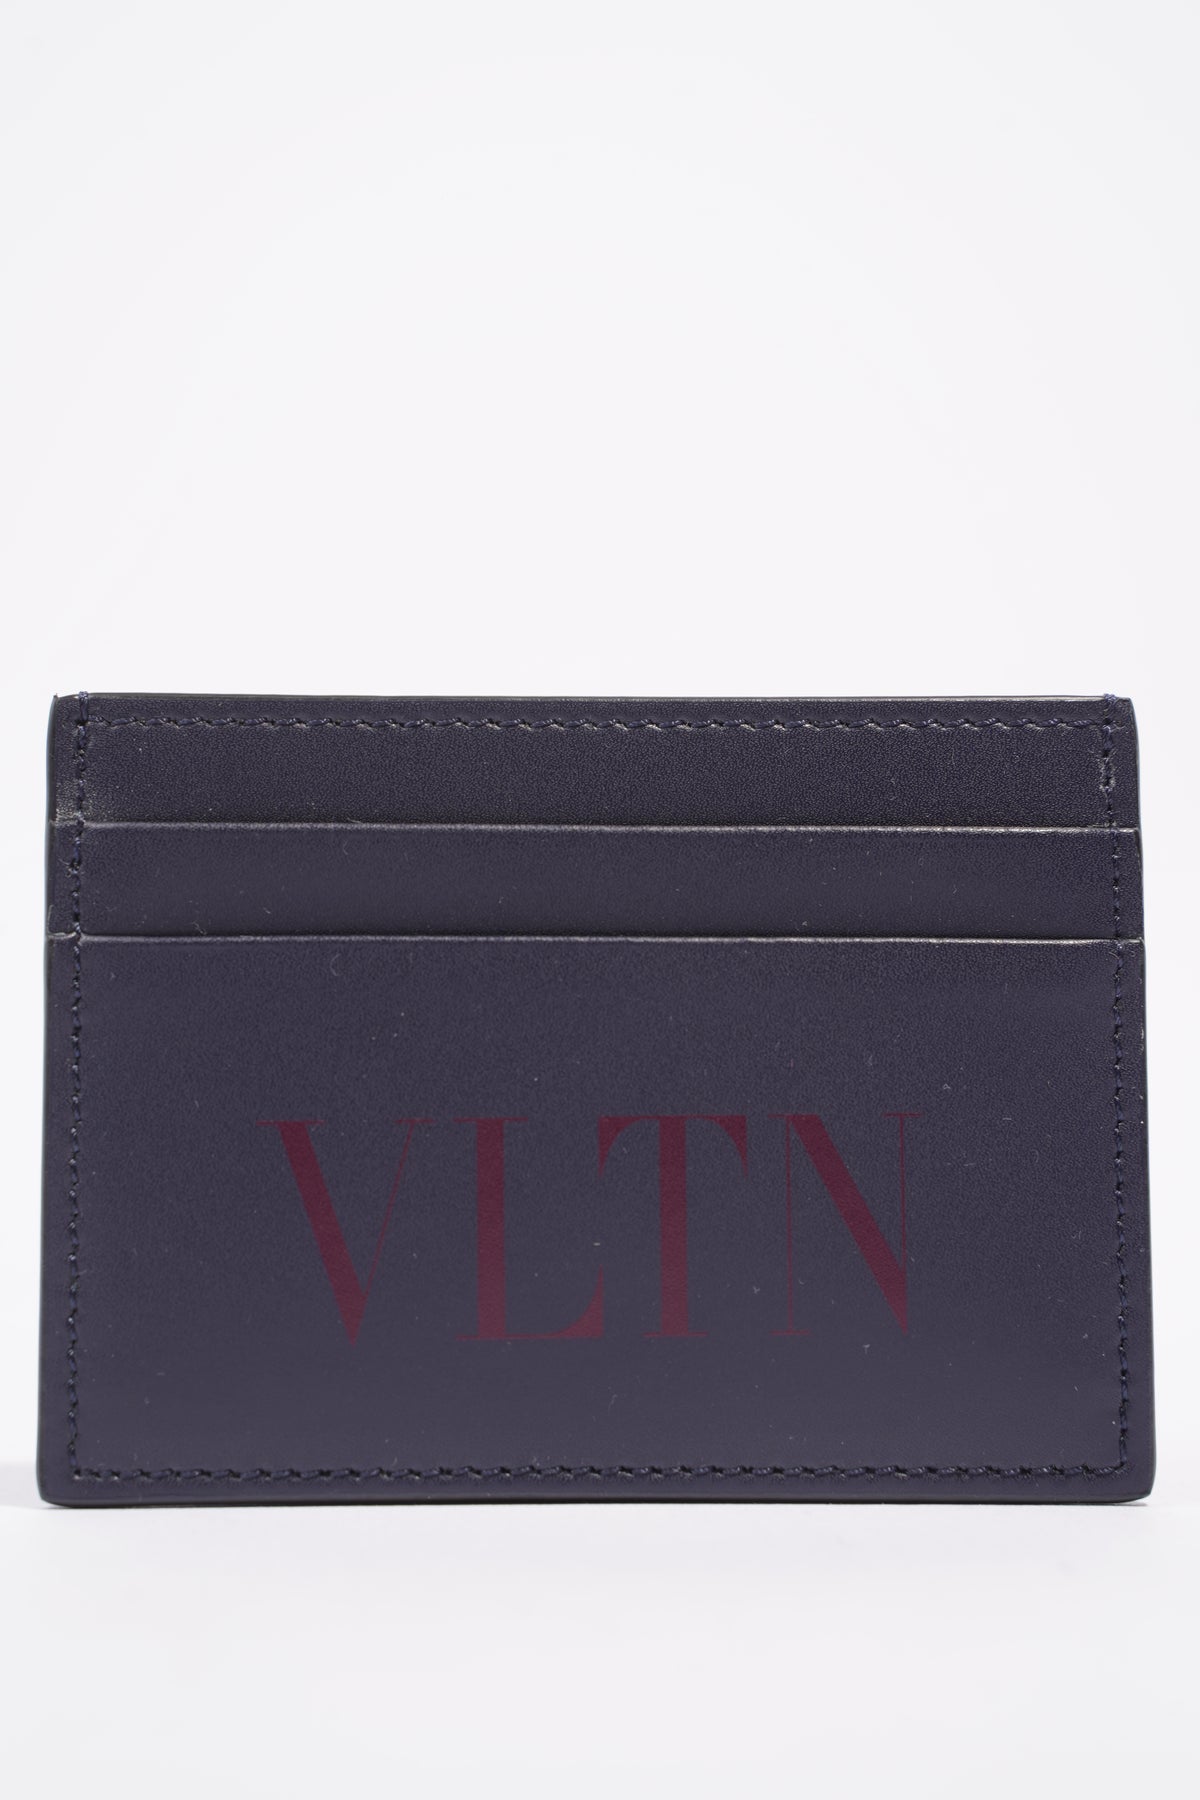 Panthère de Cartier Small Leather Goods, Card holder